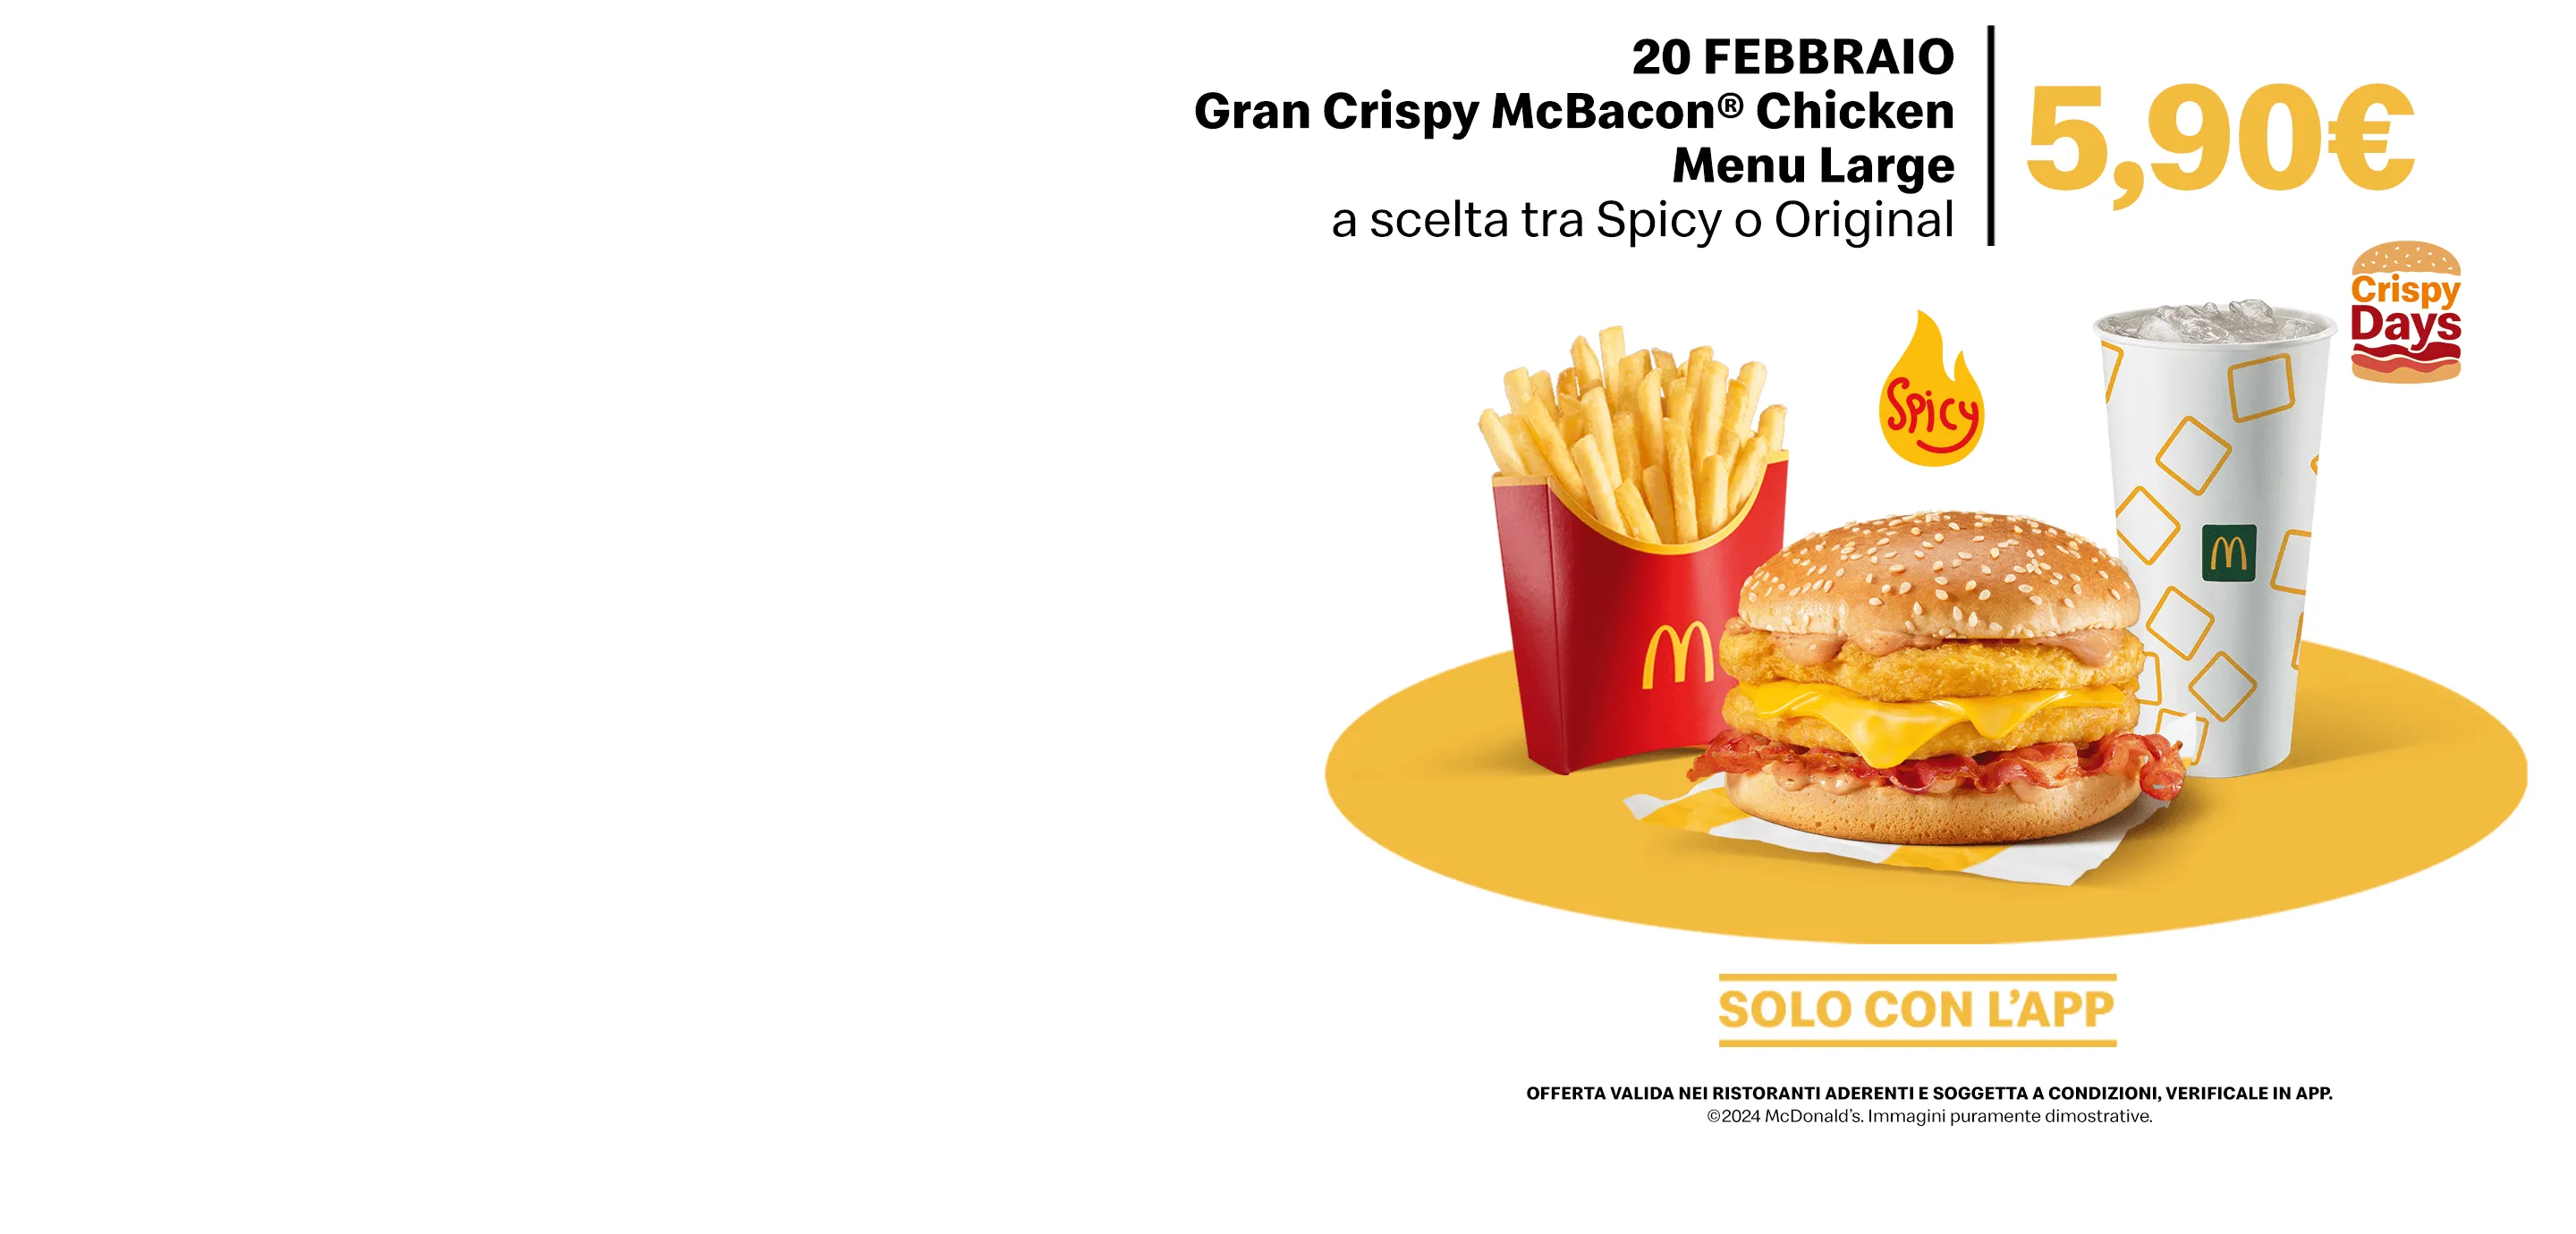 Gran Crispy McBacon® Menu Large a scelta tra Spicy o Original a 5,90€